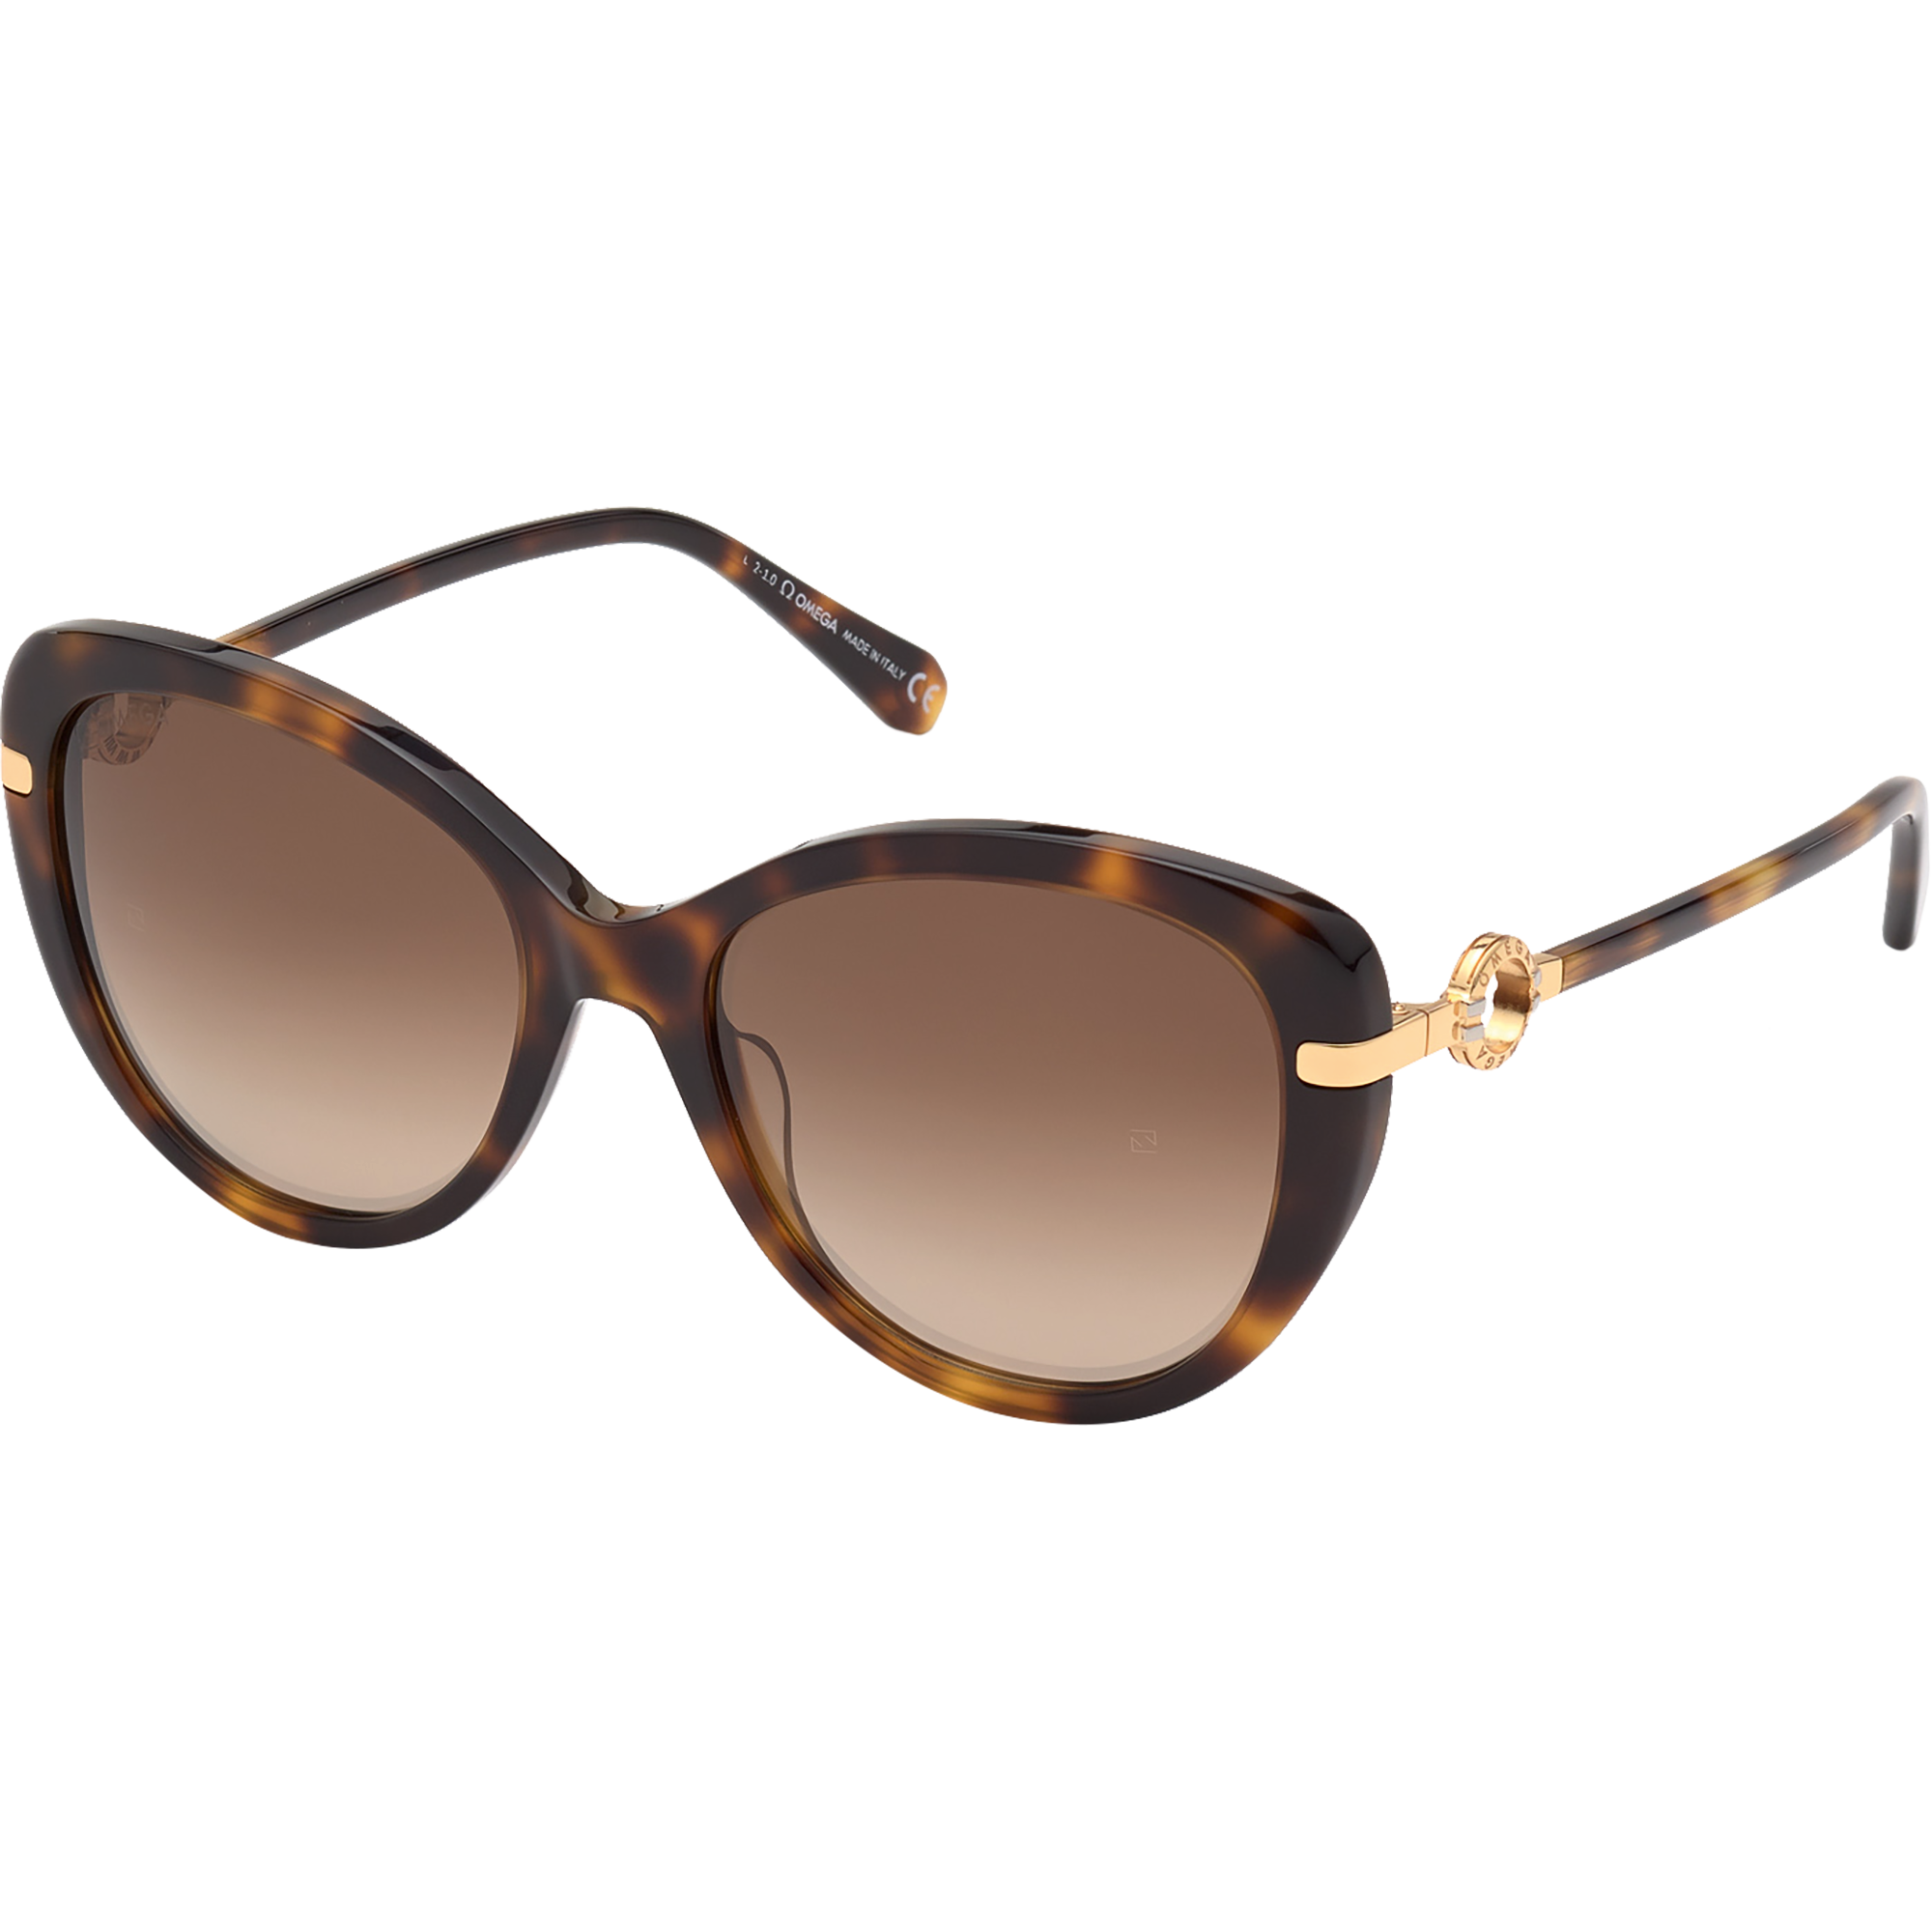 Sunglasses - Cat Eye style, Woman - OM0032-H5652G